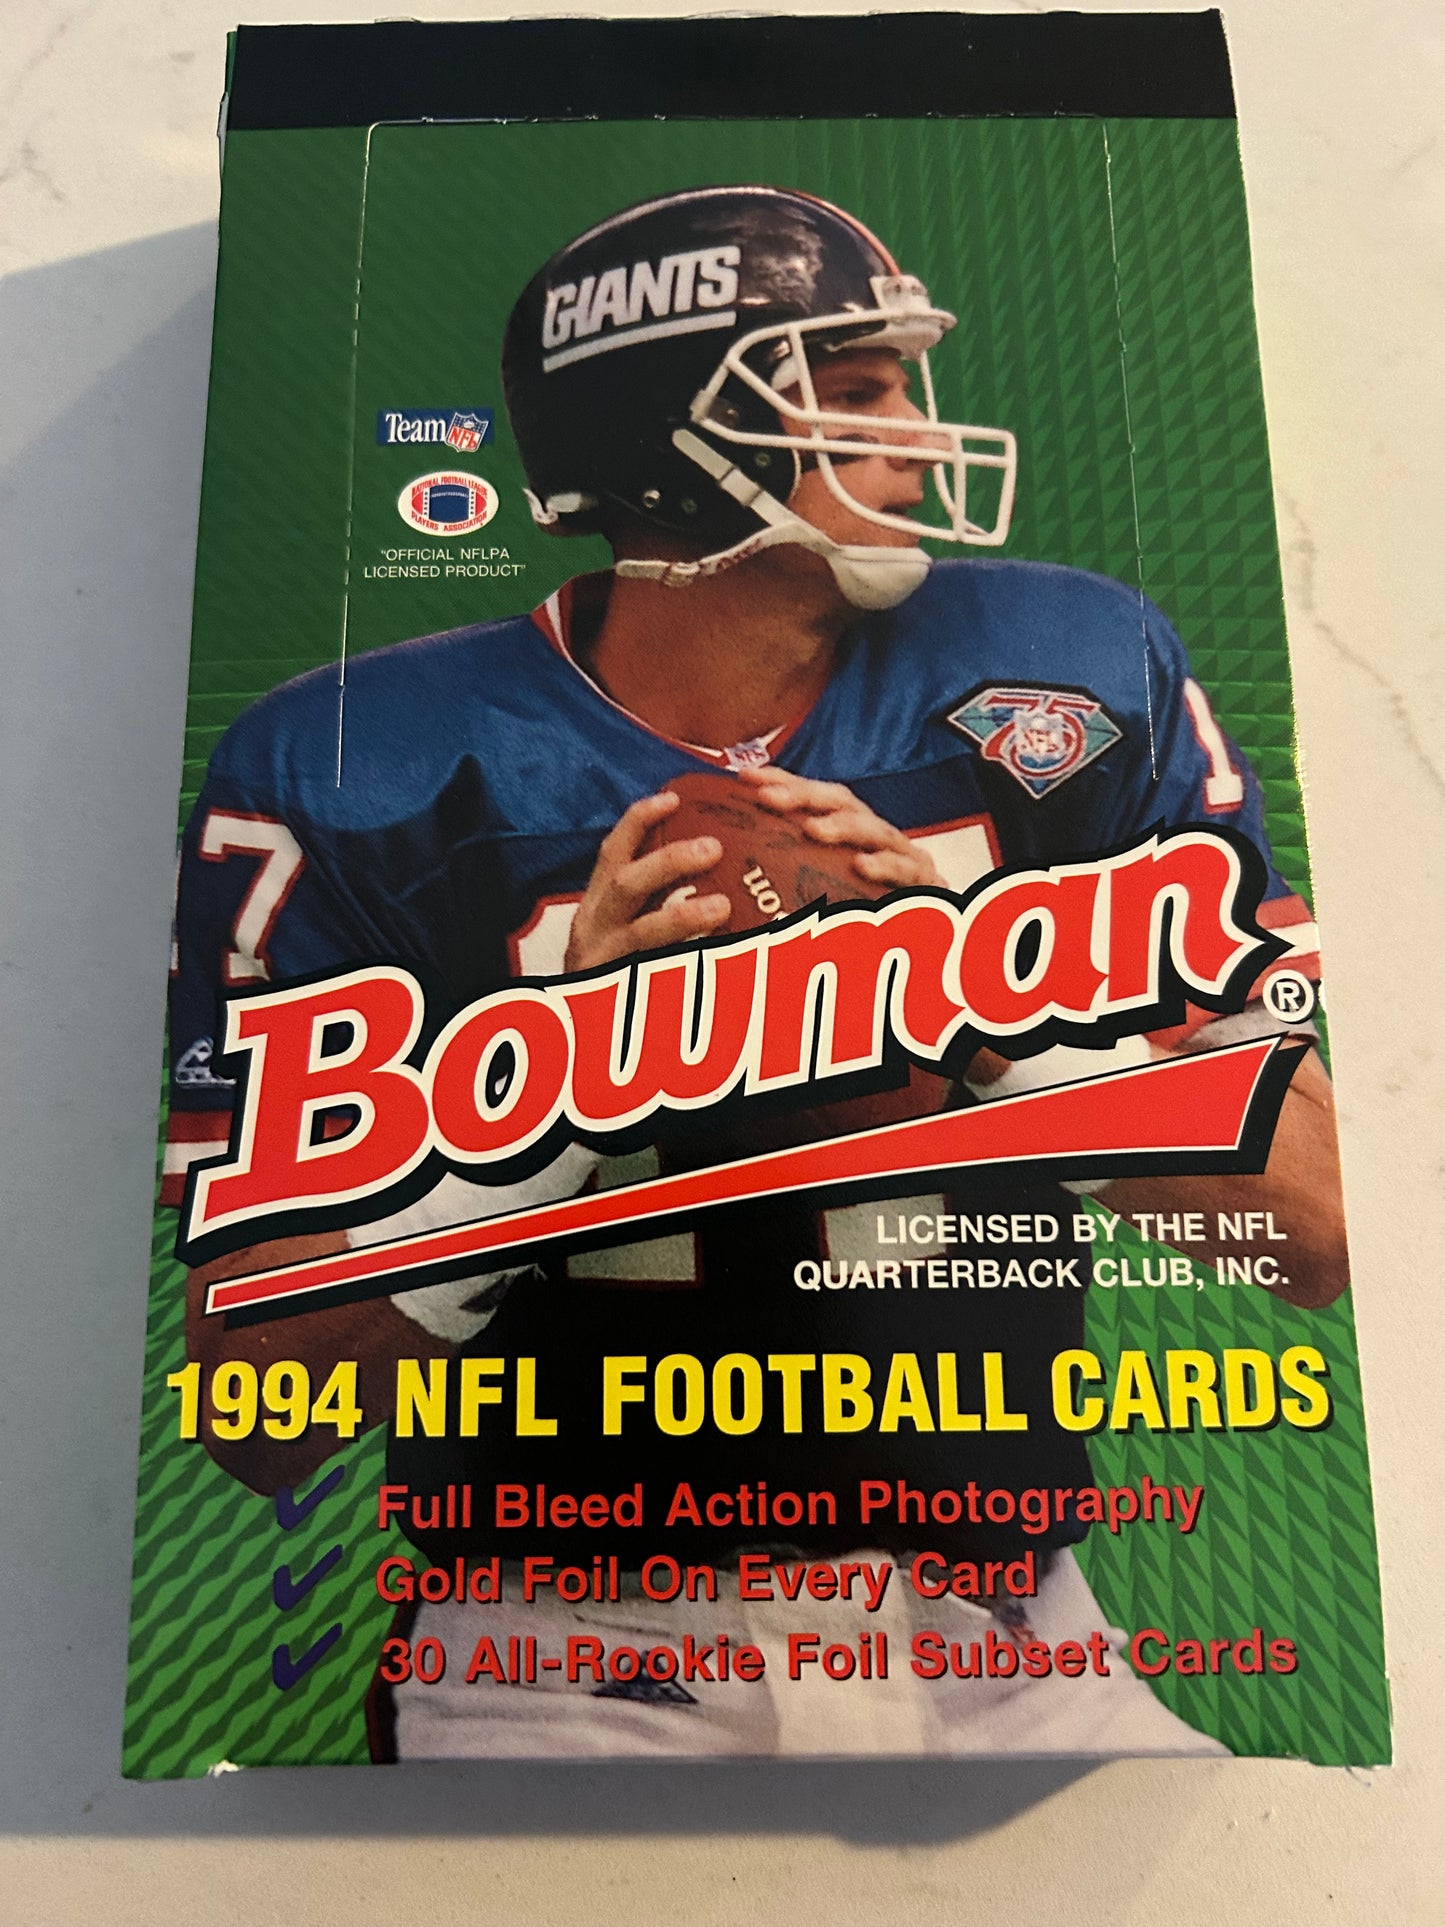 1994 Bowman Football 3 Pack Lot Faulk,Dilfer,Shuler Rookies. This is a 3 pack lot